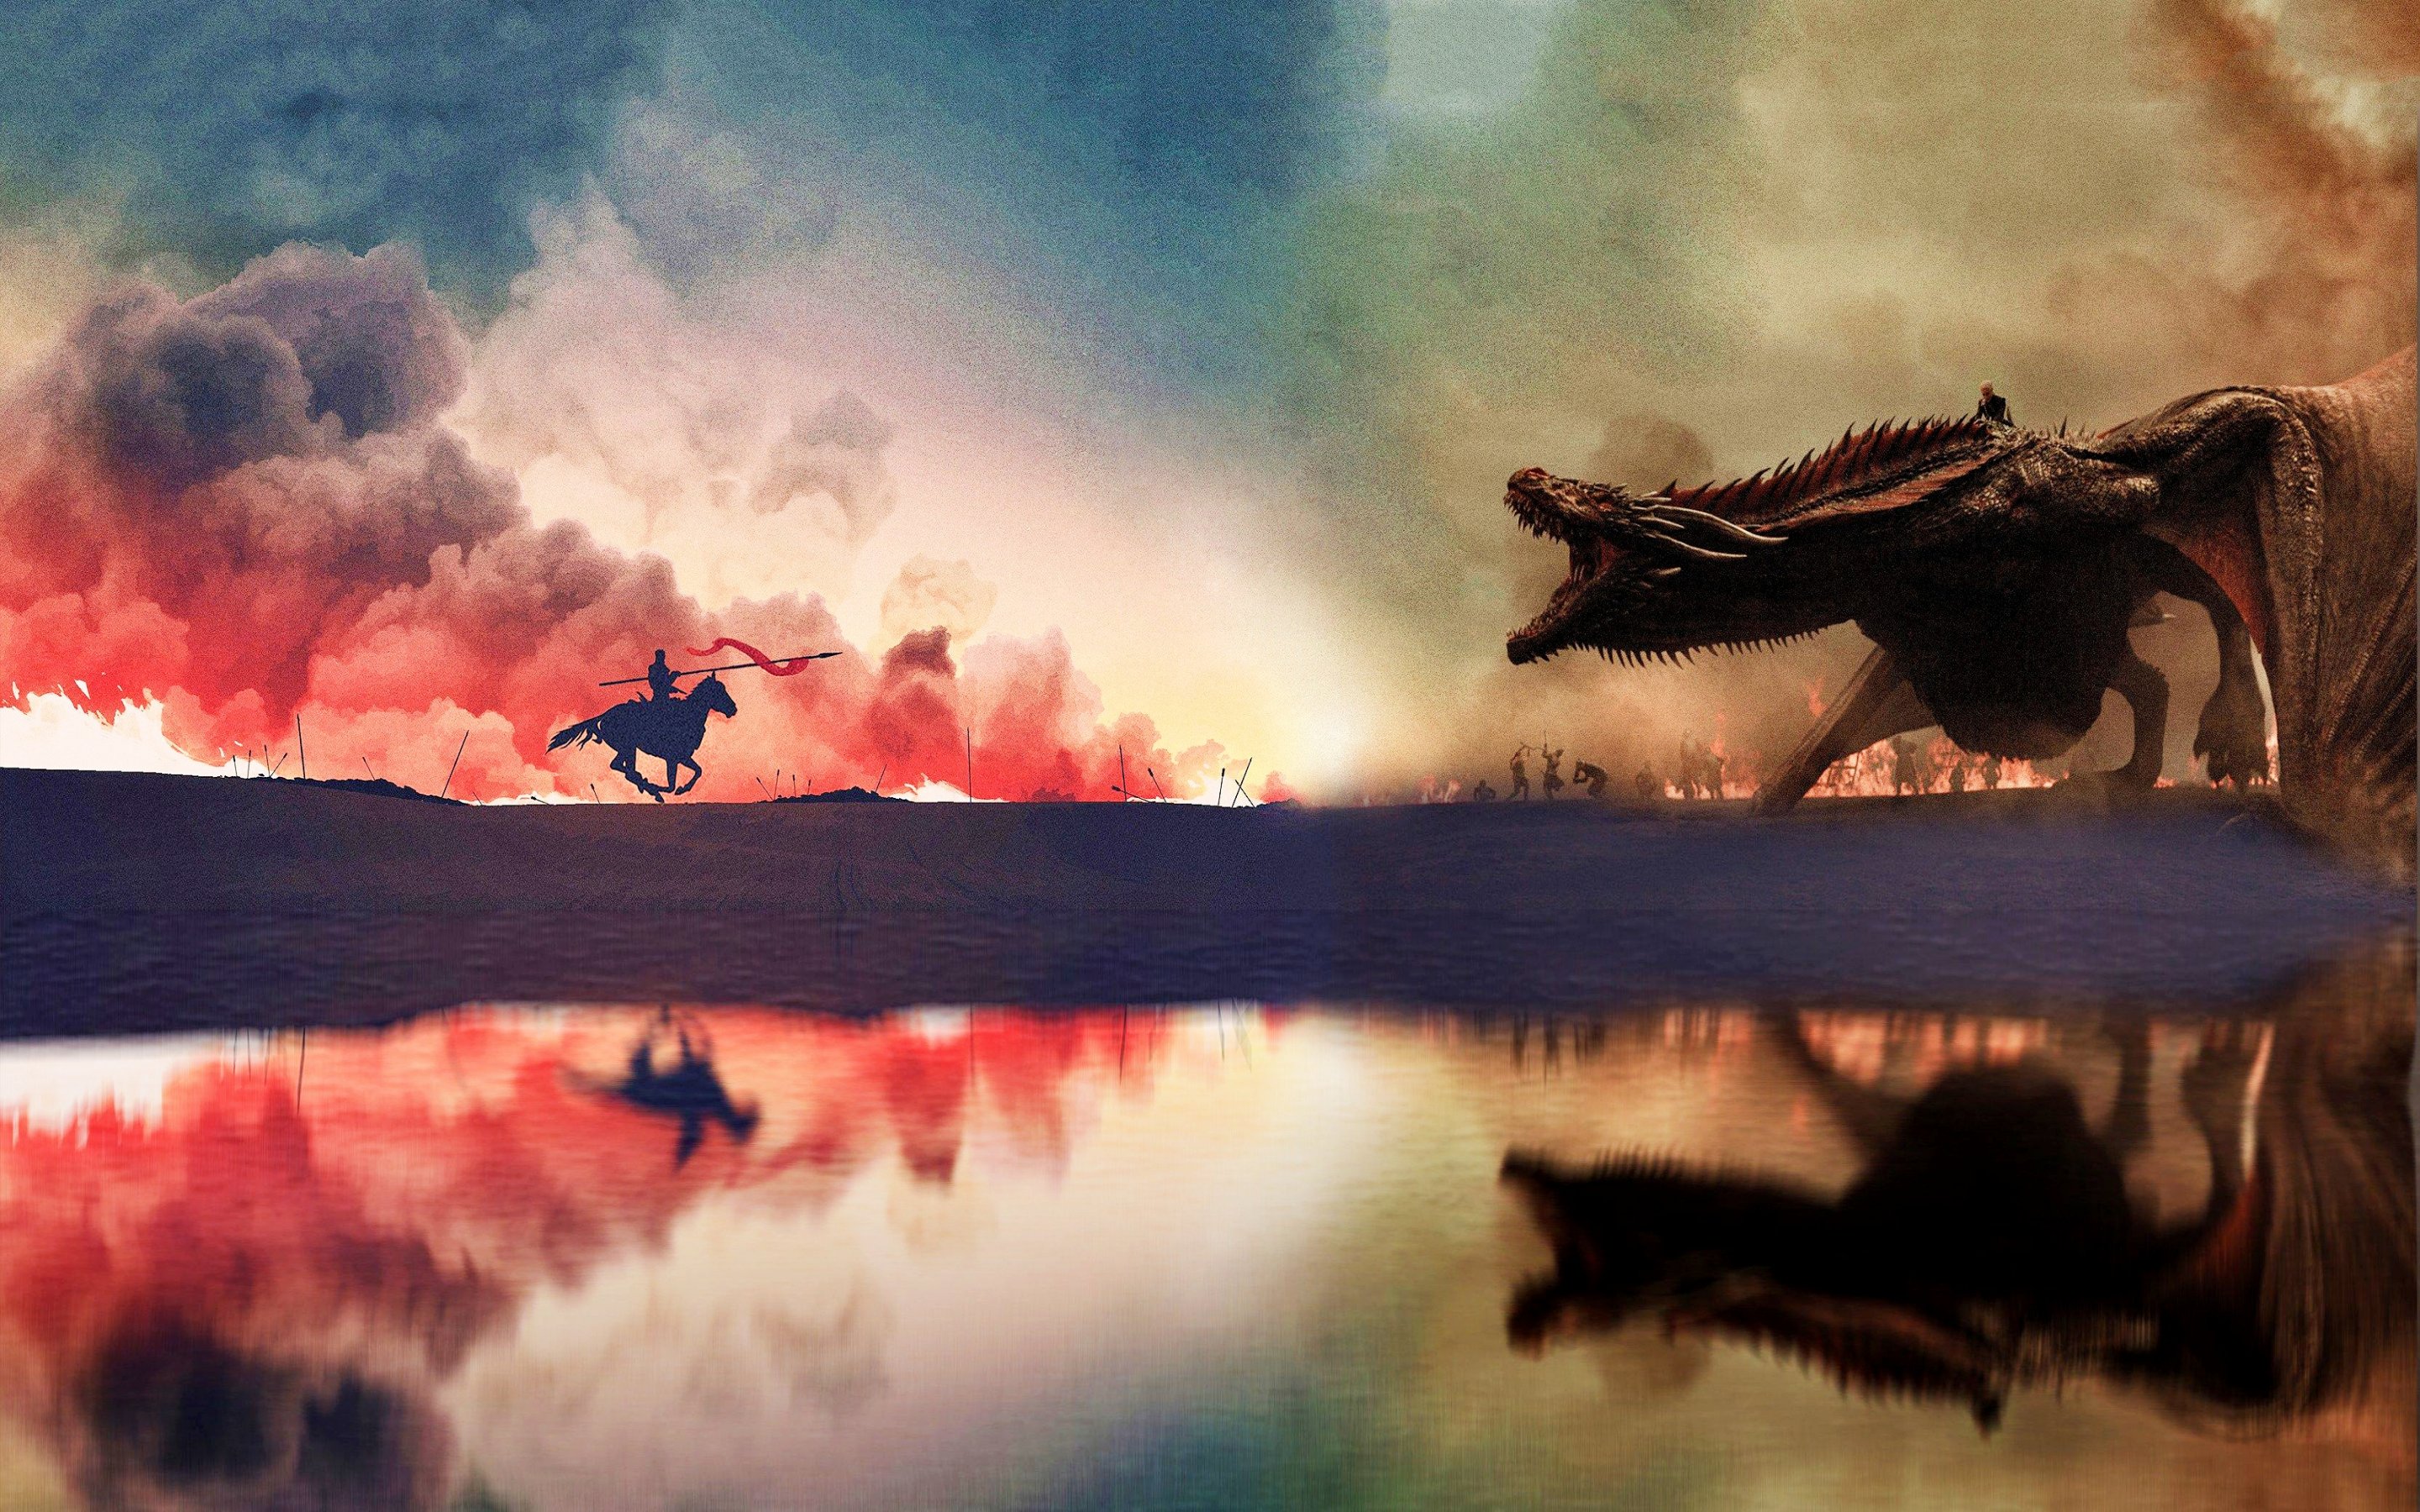 Warrior Dragon Horse Game Of Thrones Daenerys Targaryen Digital Art Reflection Smoke 2880x1800